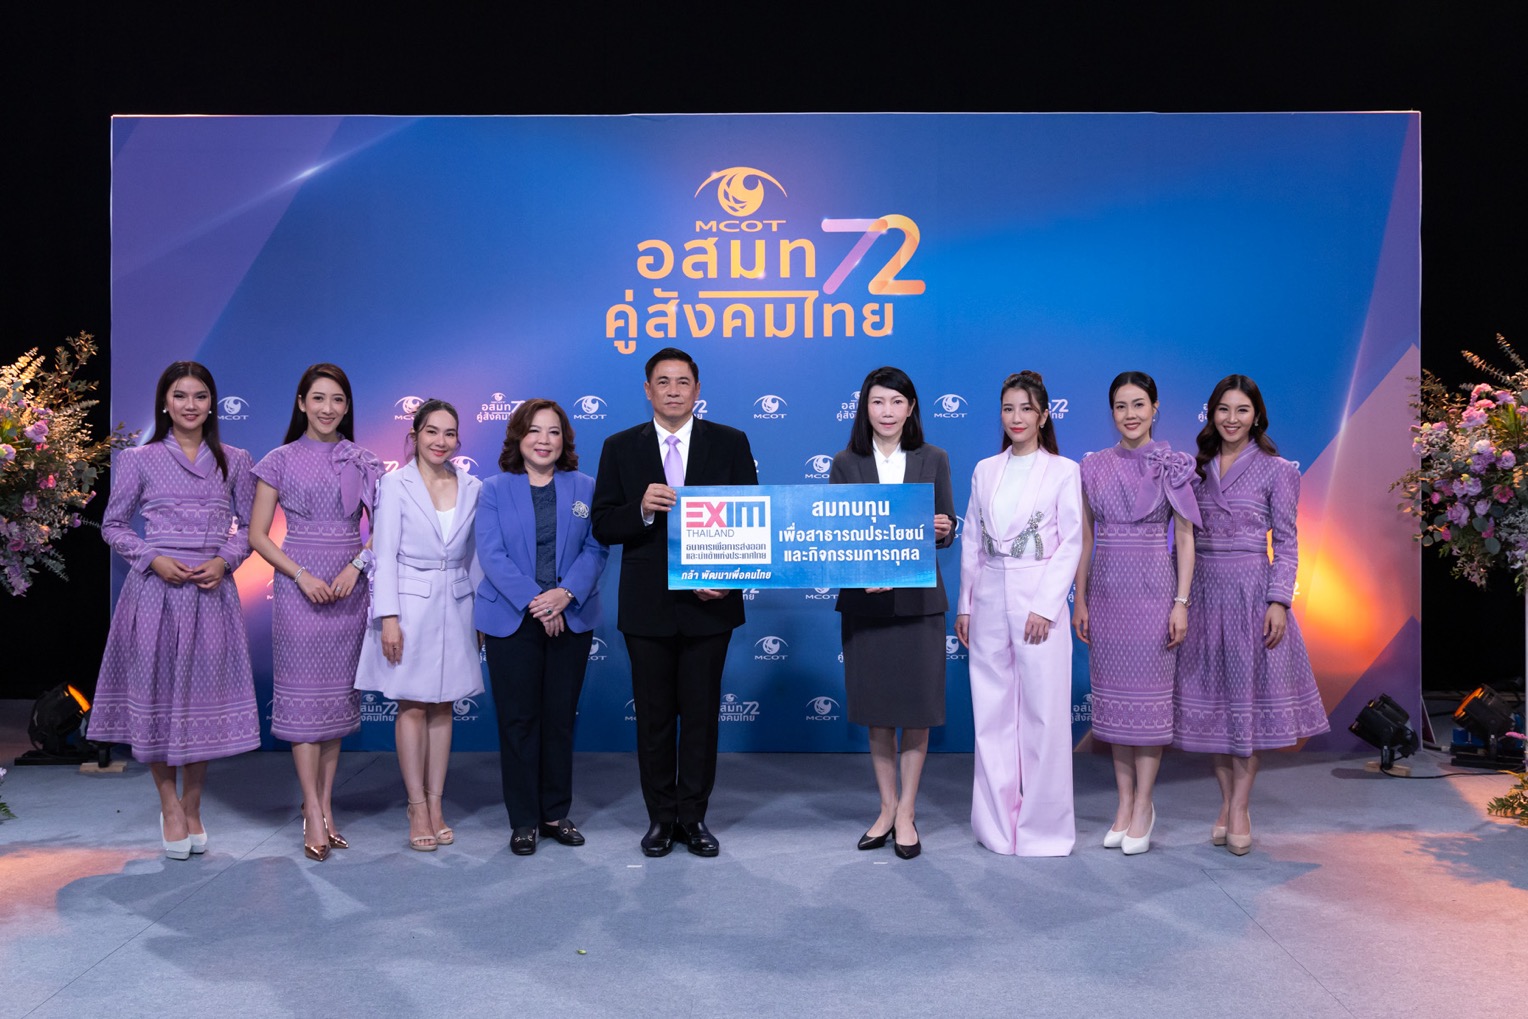 EXIM Thailand Extends Congratulations on MCOT